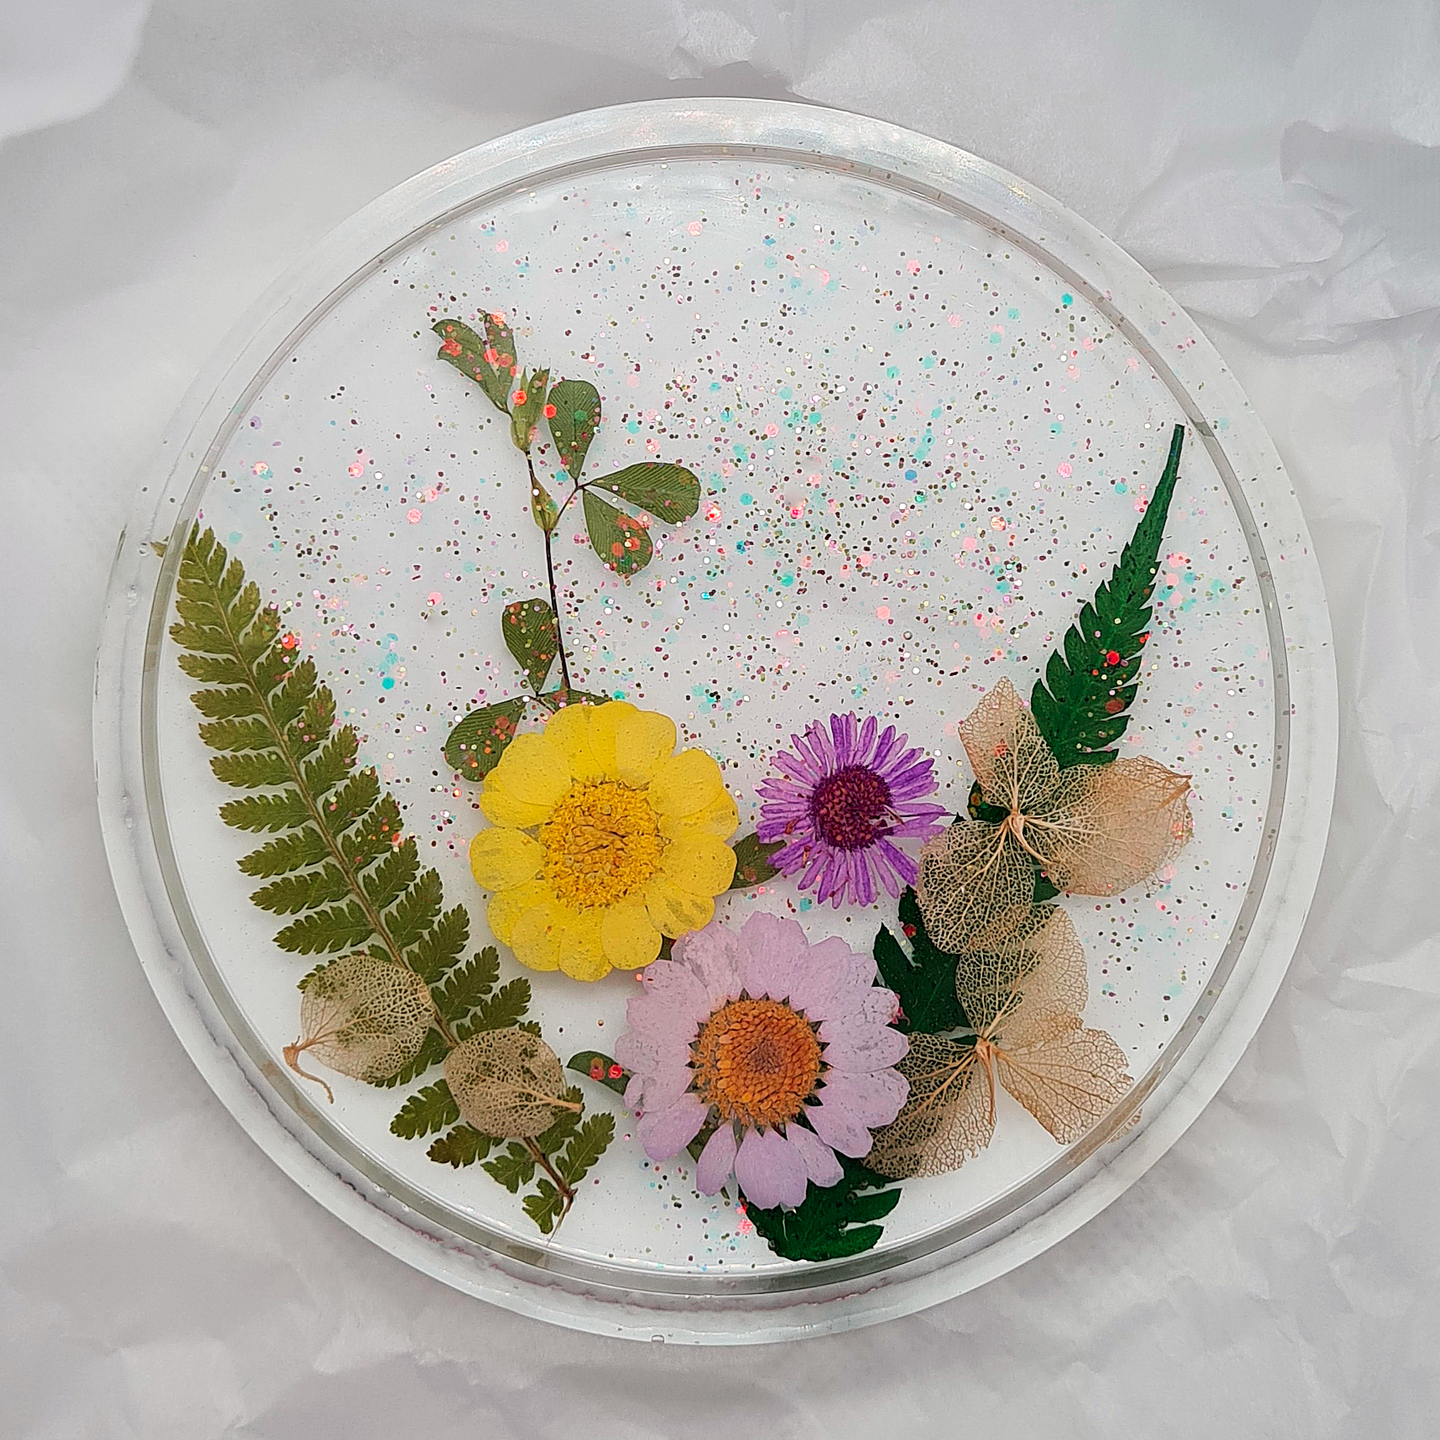 Smile 10 rim  Real Pressed Flowers & Leaves Resin Coaster  Handmade